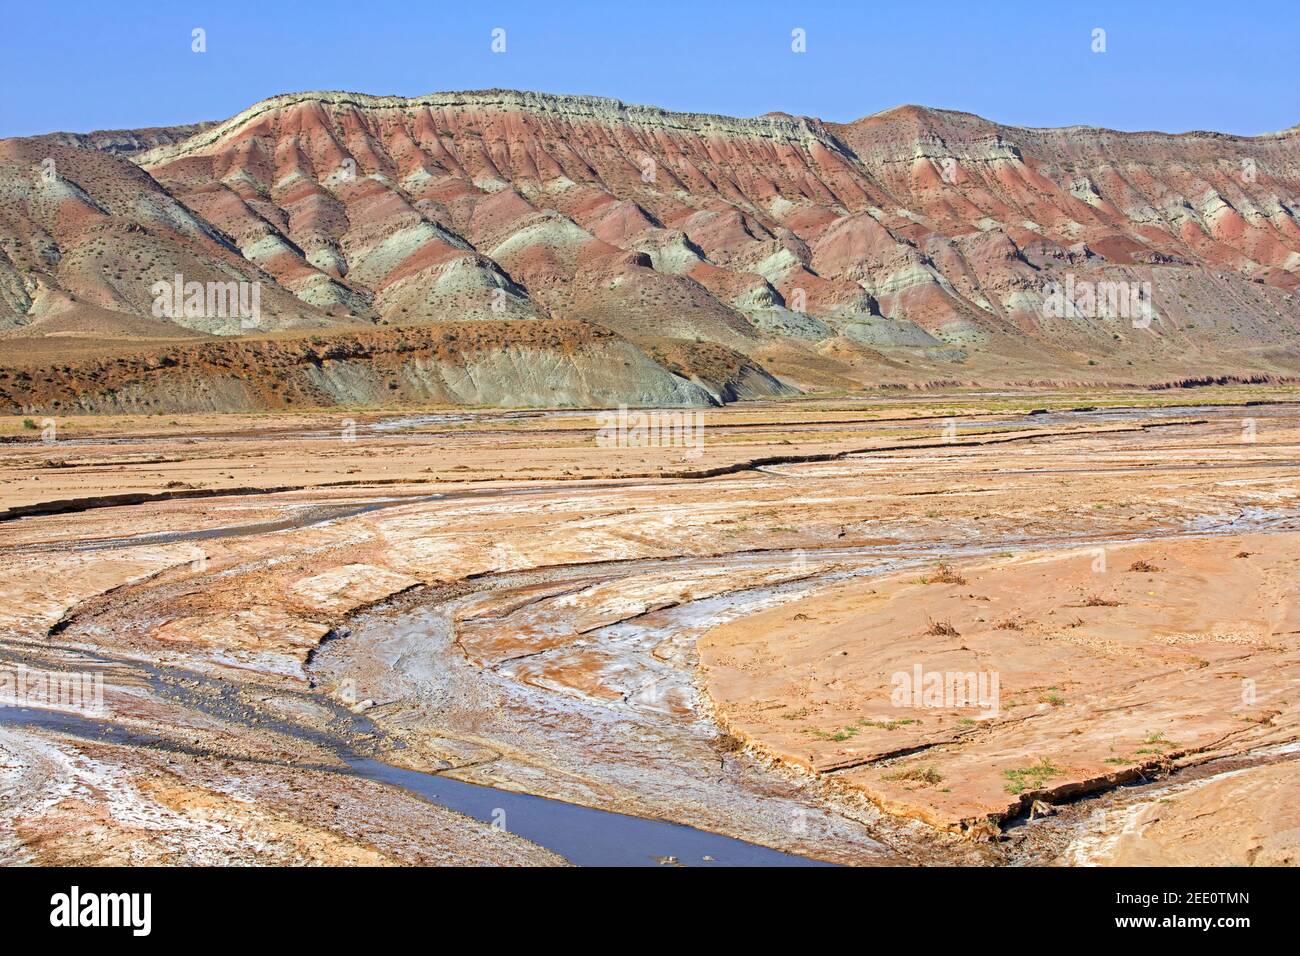 Semi-arid Azerbaijan shrub desert landscape showing mountain with sediment layers and riverbed, East Azerbaijan Province, Iran Stock Photo